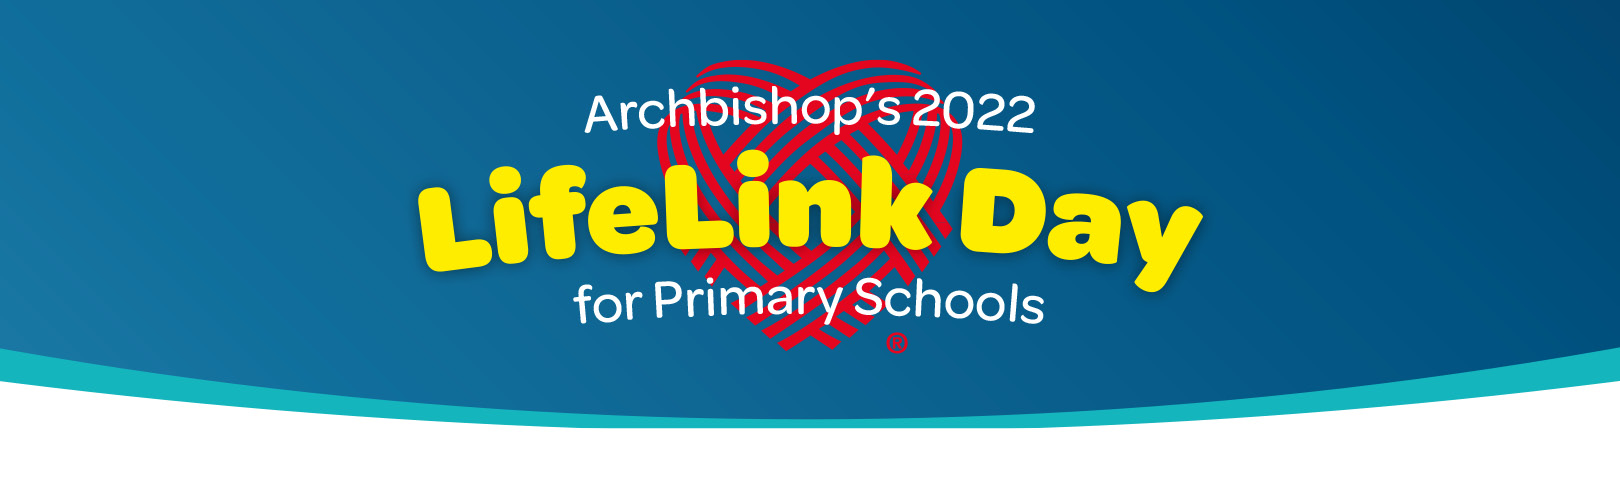 LifeLink Day 2022 for Primary Schools